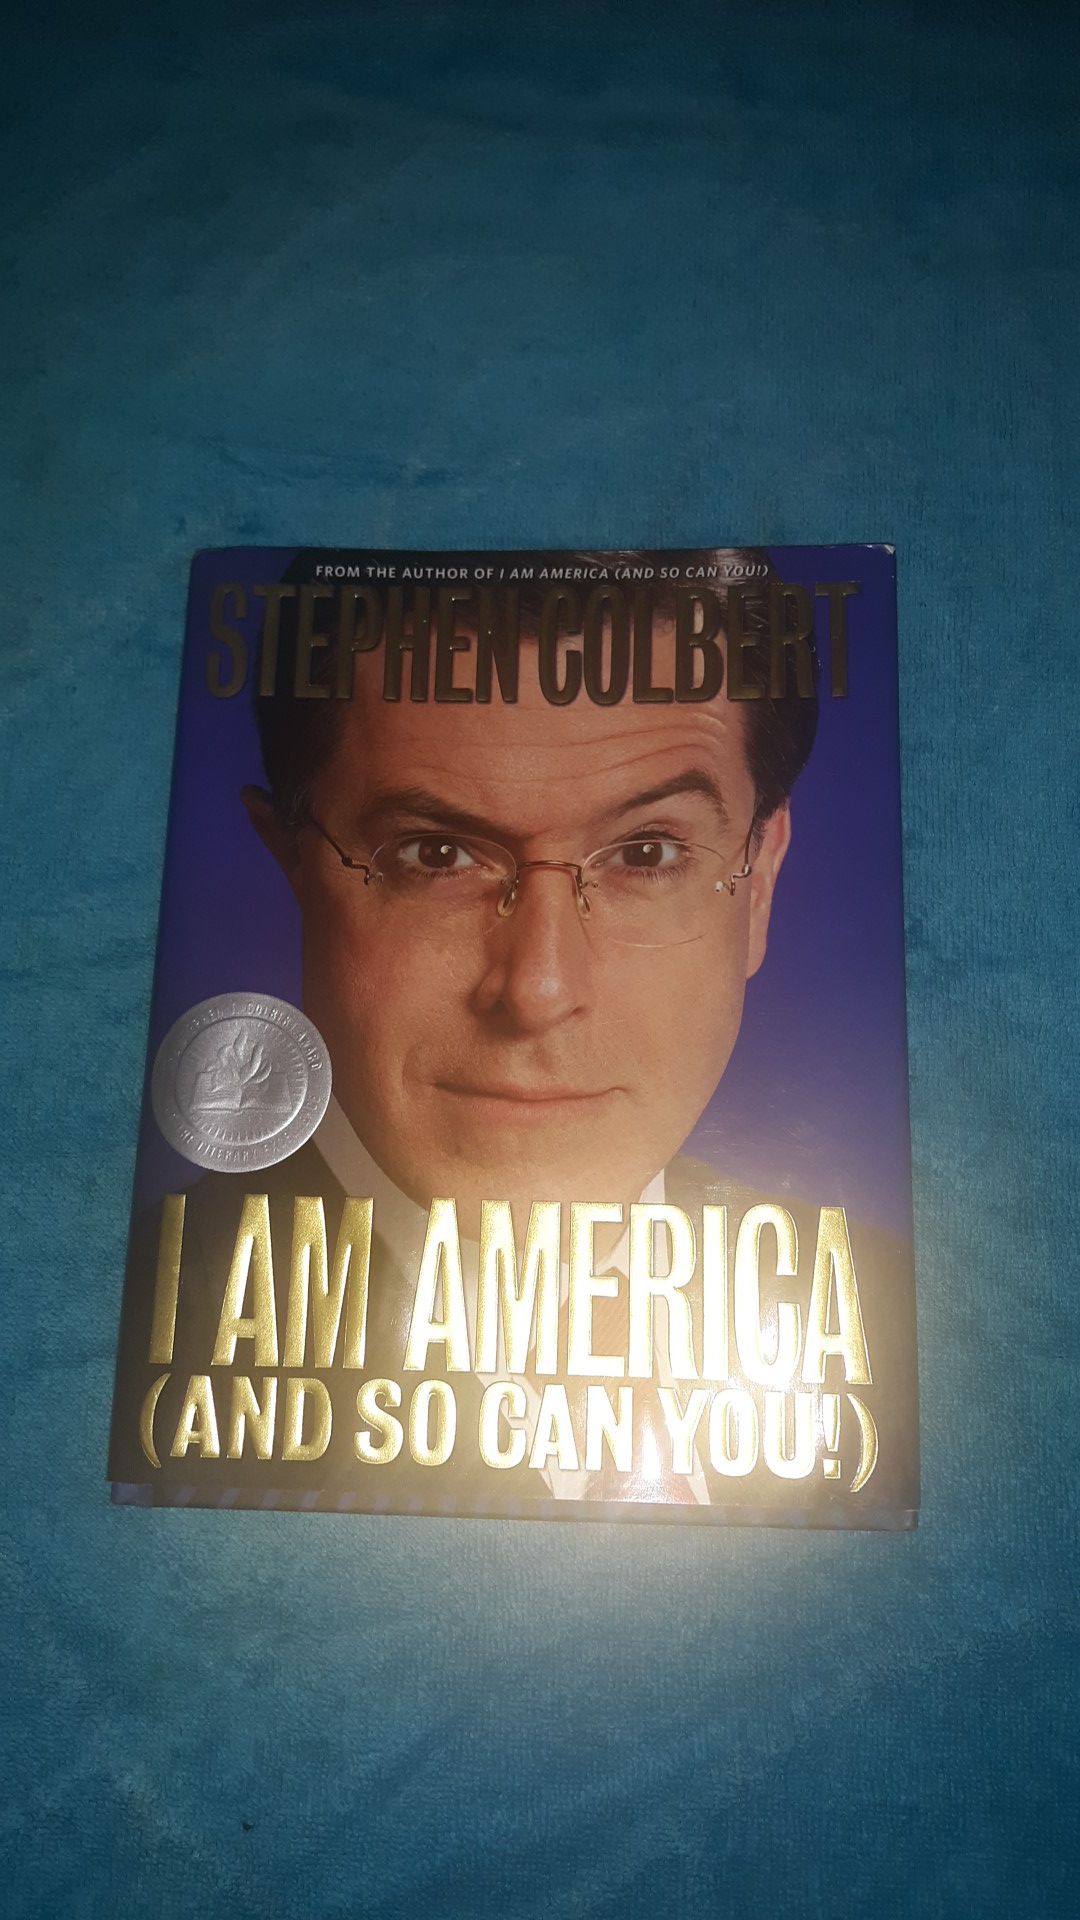 Stephen Colbert book.